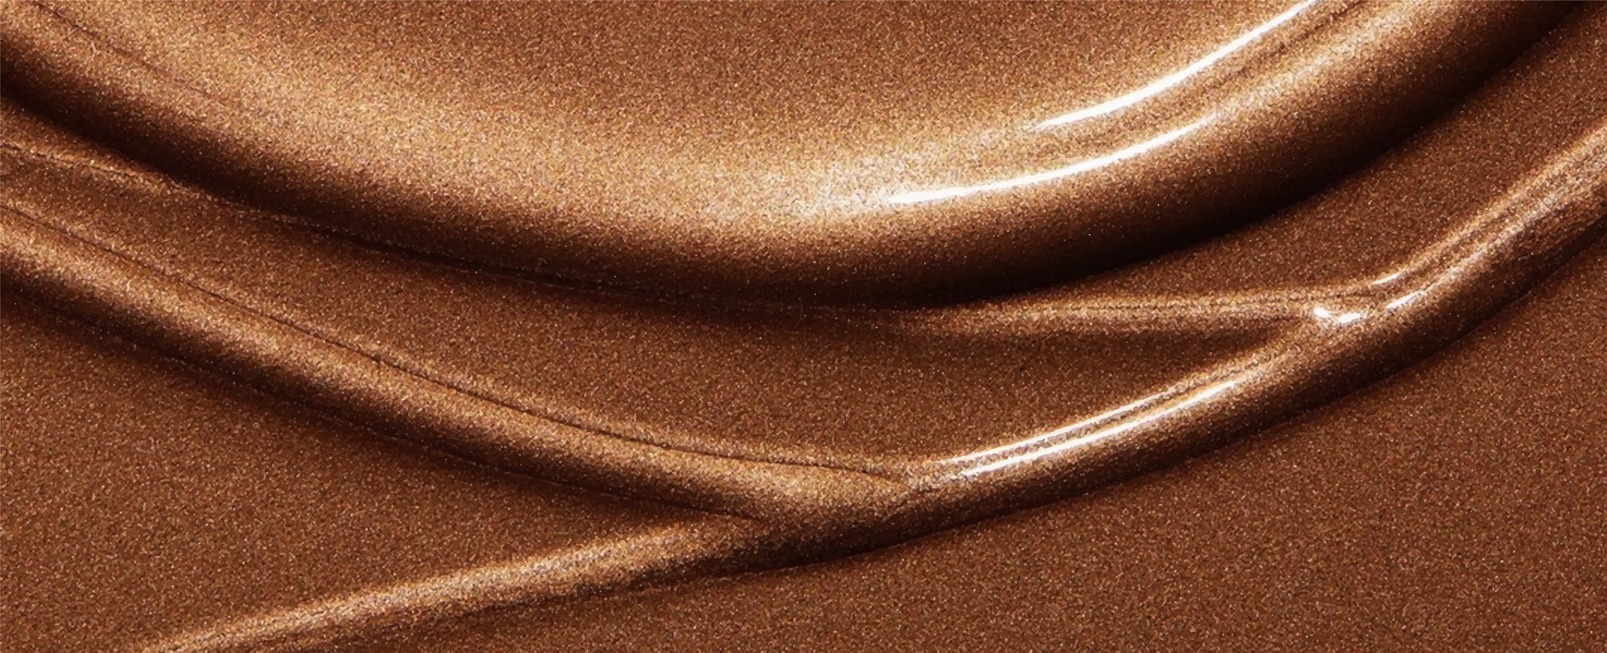 luxury smooth BROWN liquid background